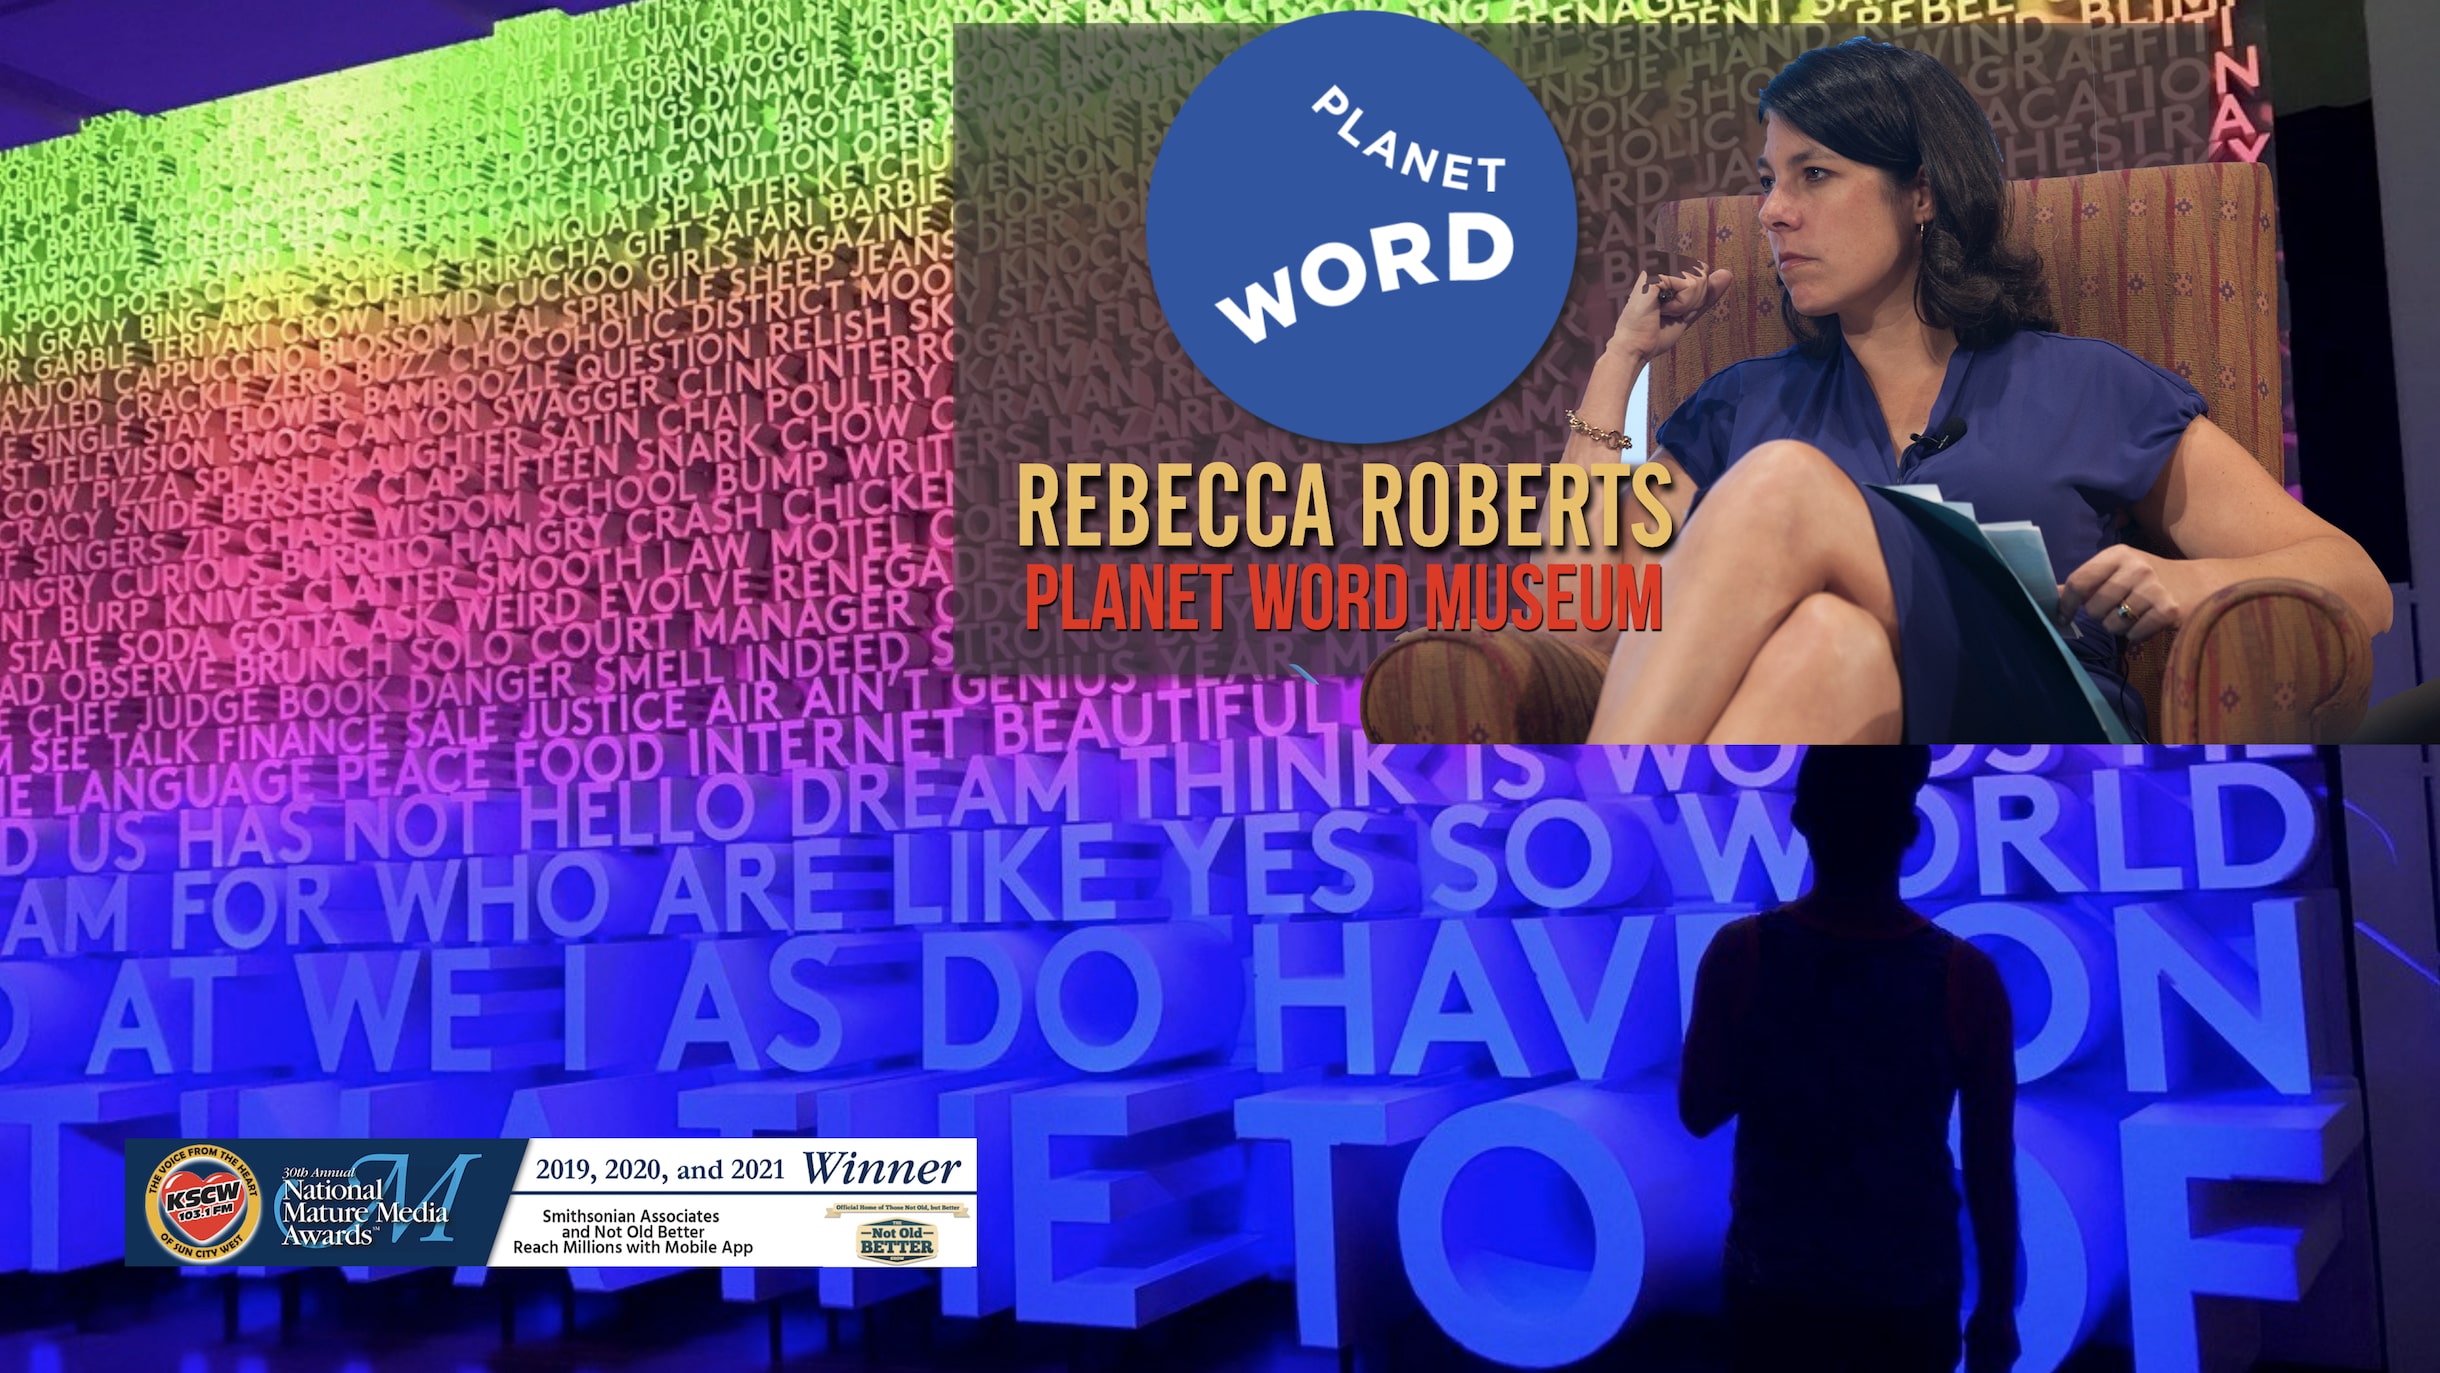 Planet Word Museum – Rebecca Roberts